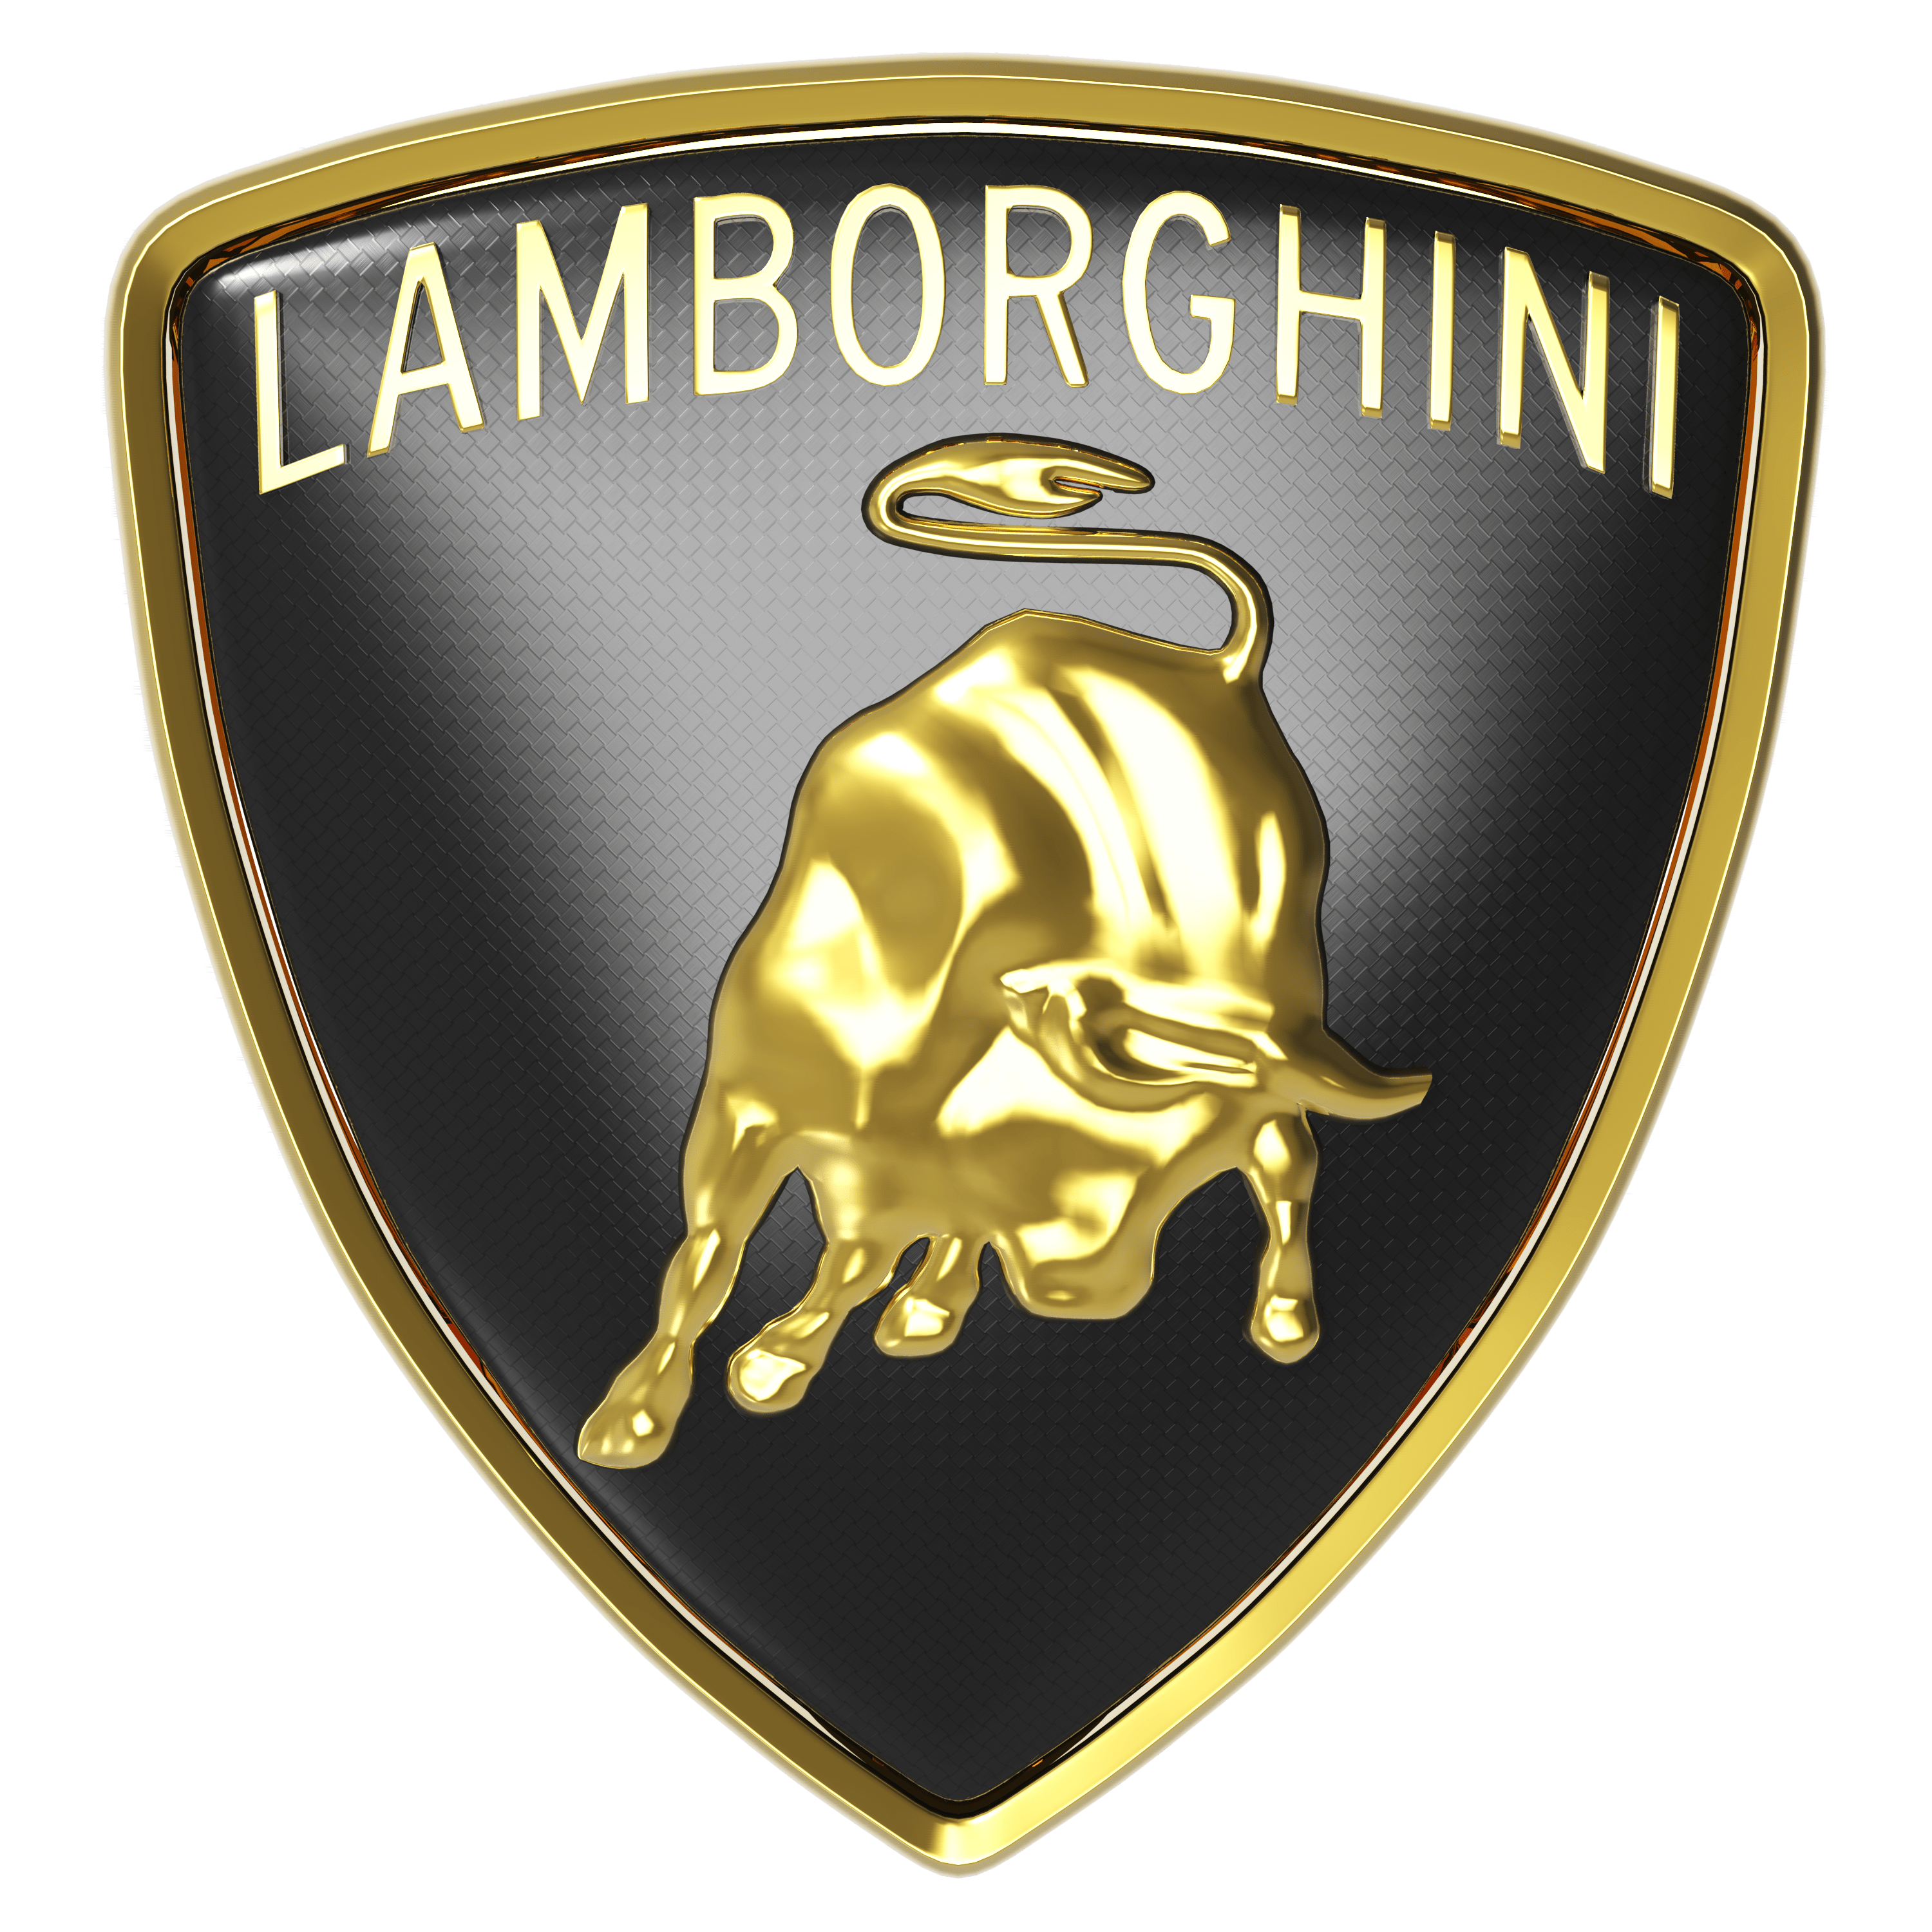 Lamborghini Logo images | World Cars Brands